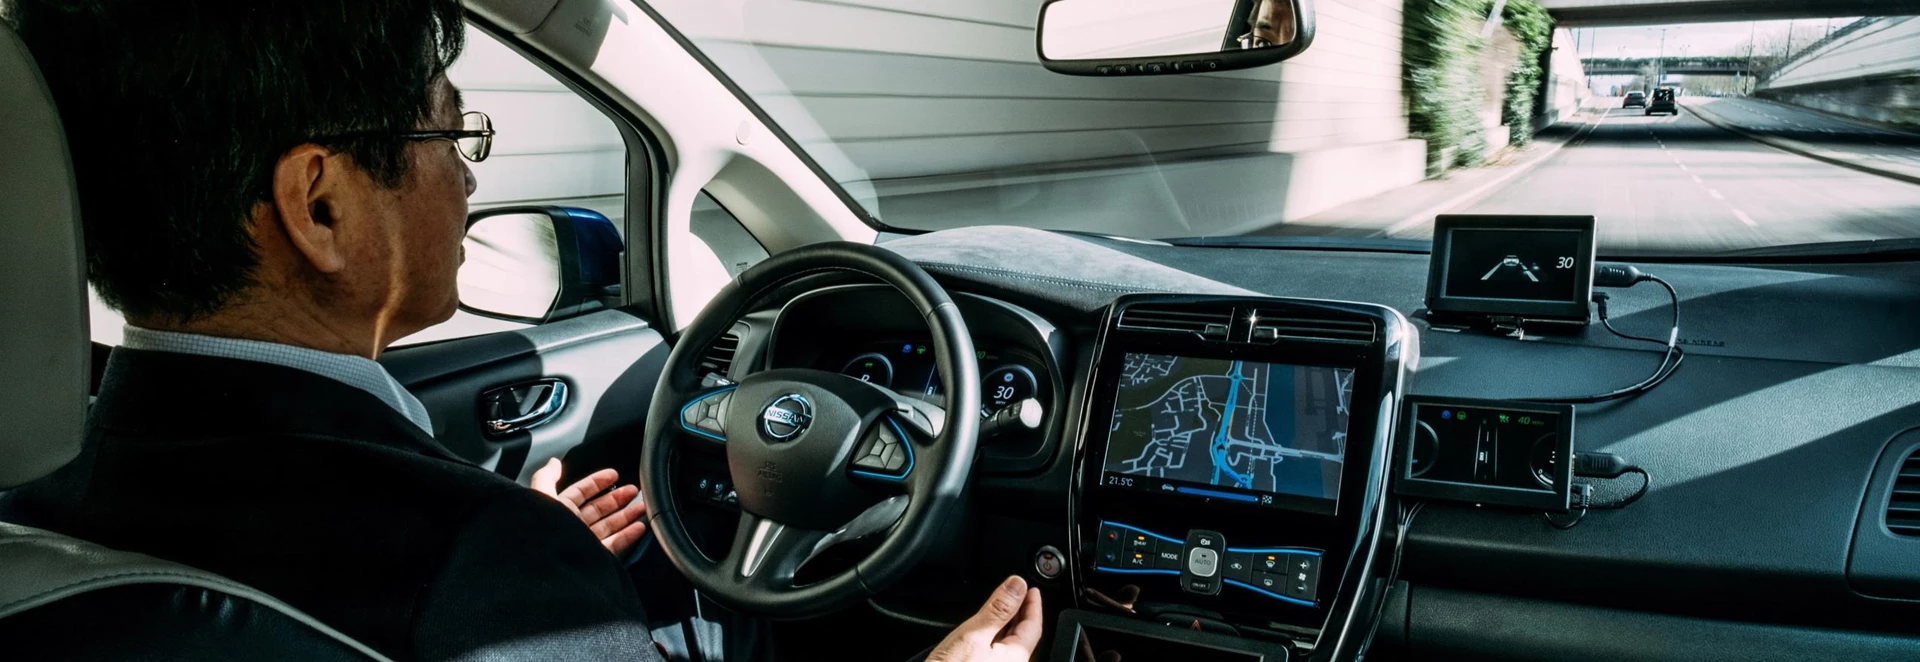 Different types of autonomous car tech could confuse motorists, insurers say 